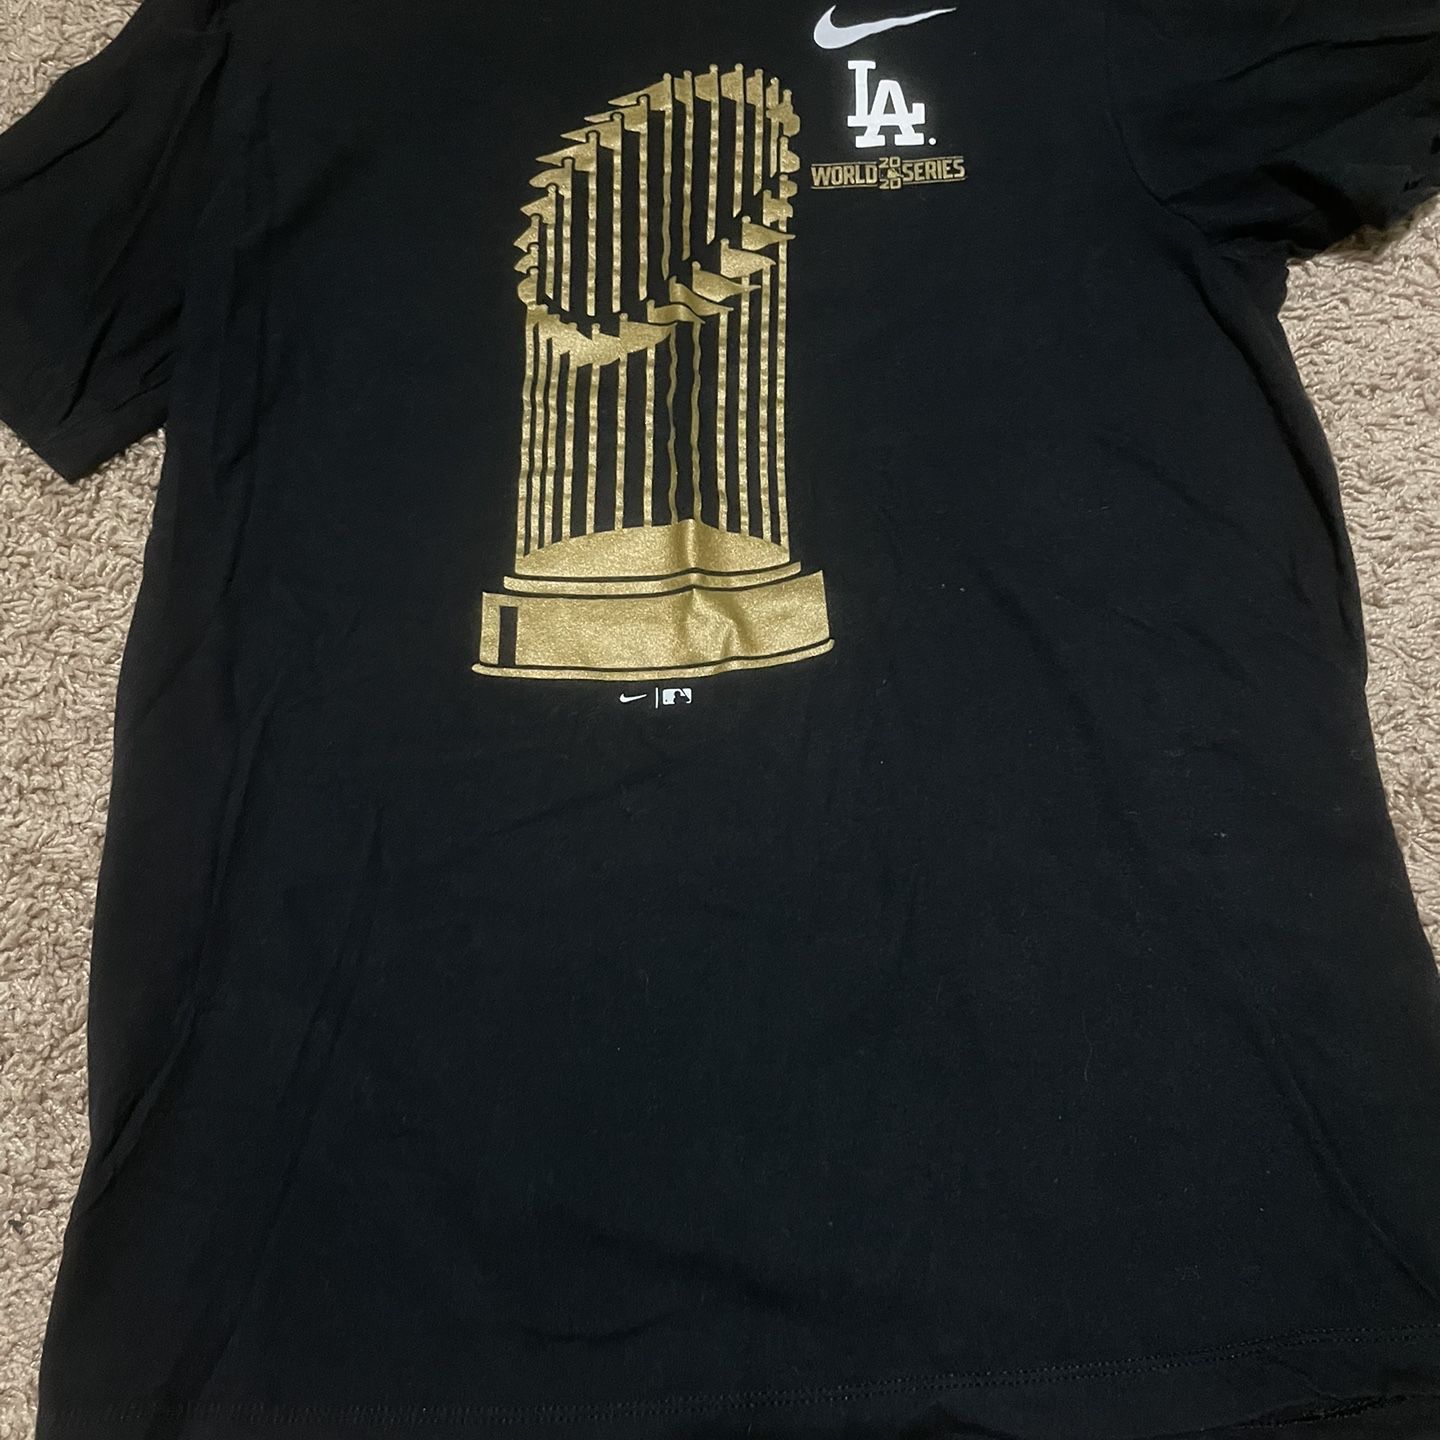 Los Angeles Dodgers Championship Shirt (Nike) for Sale in Schertz